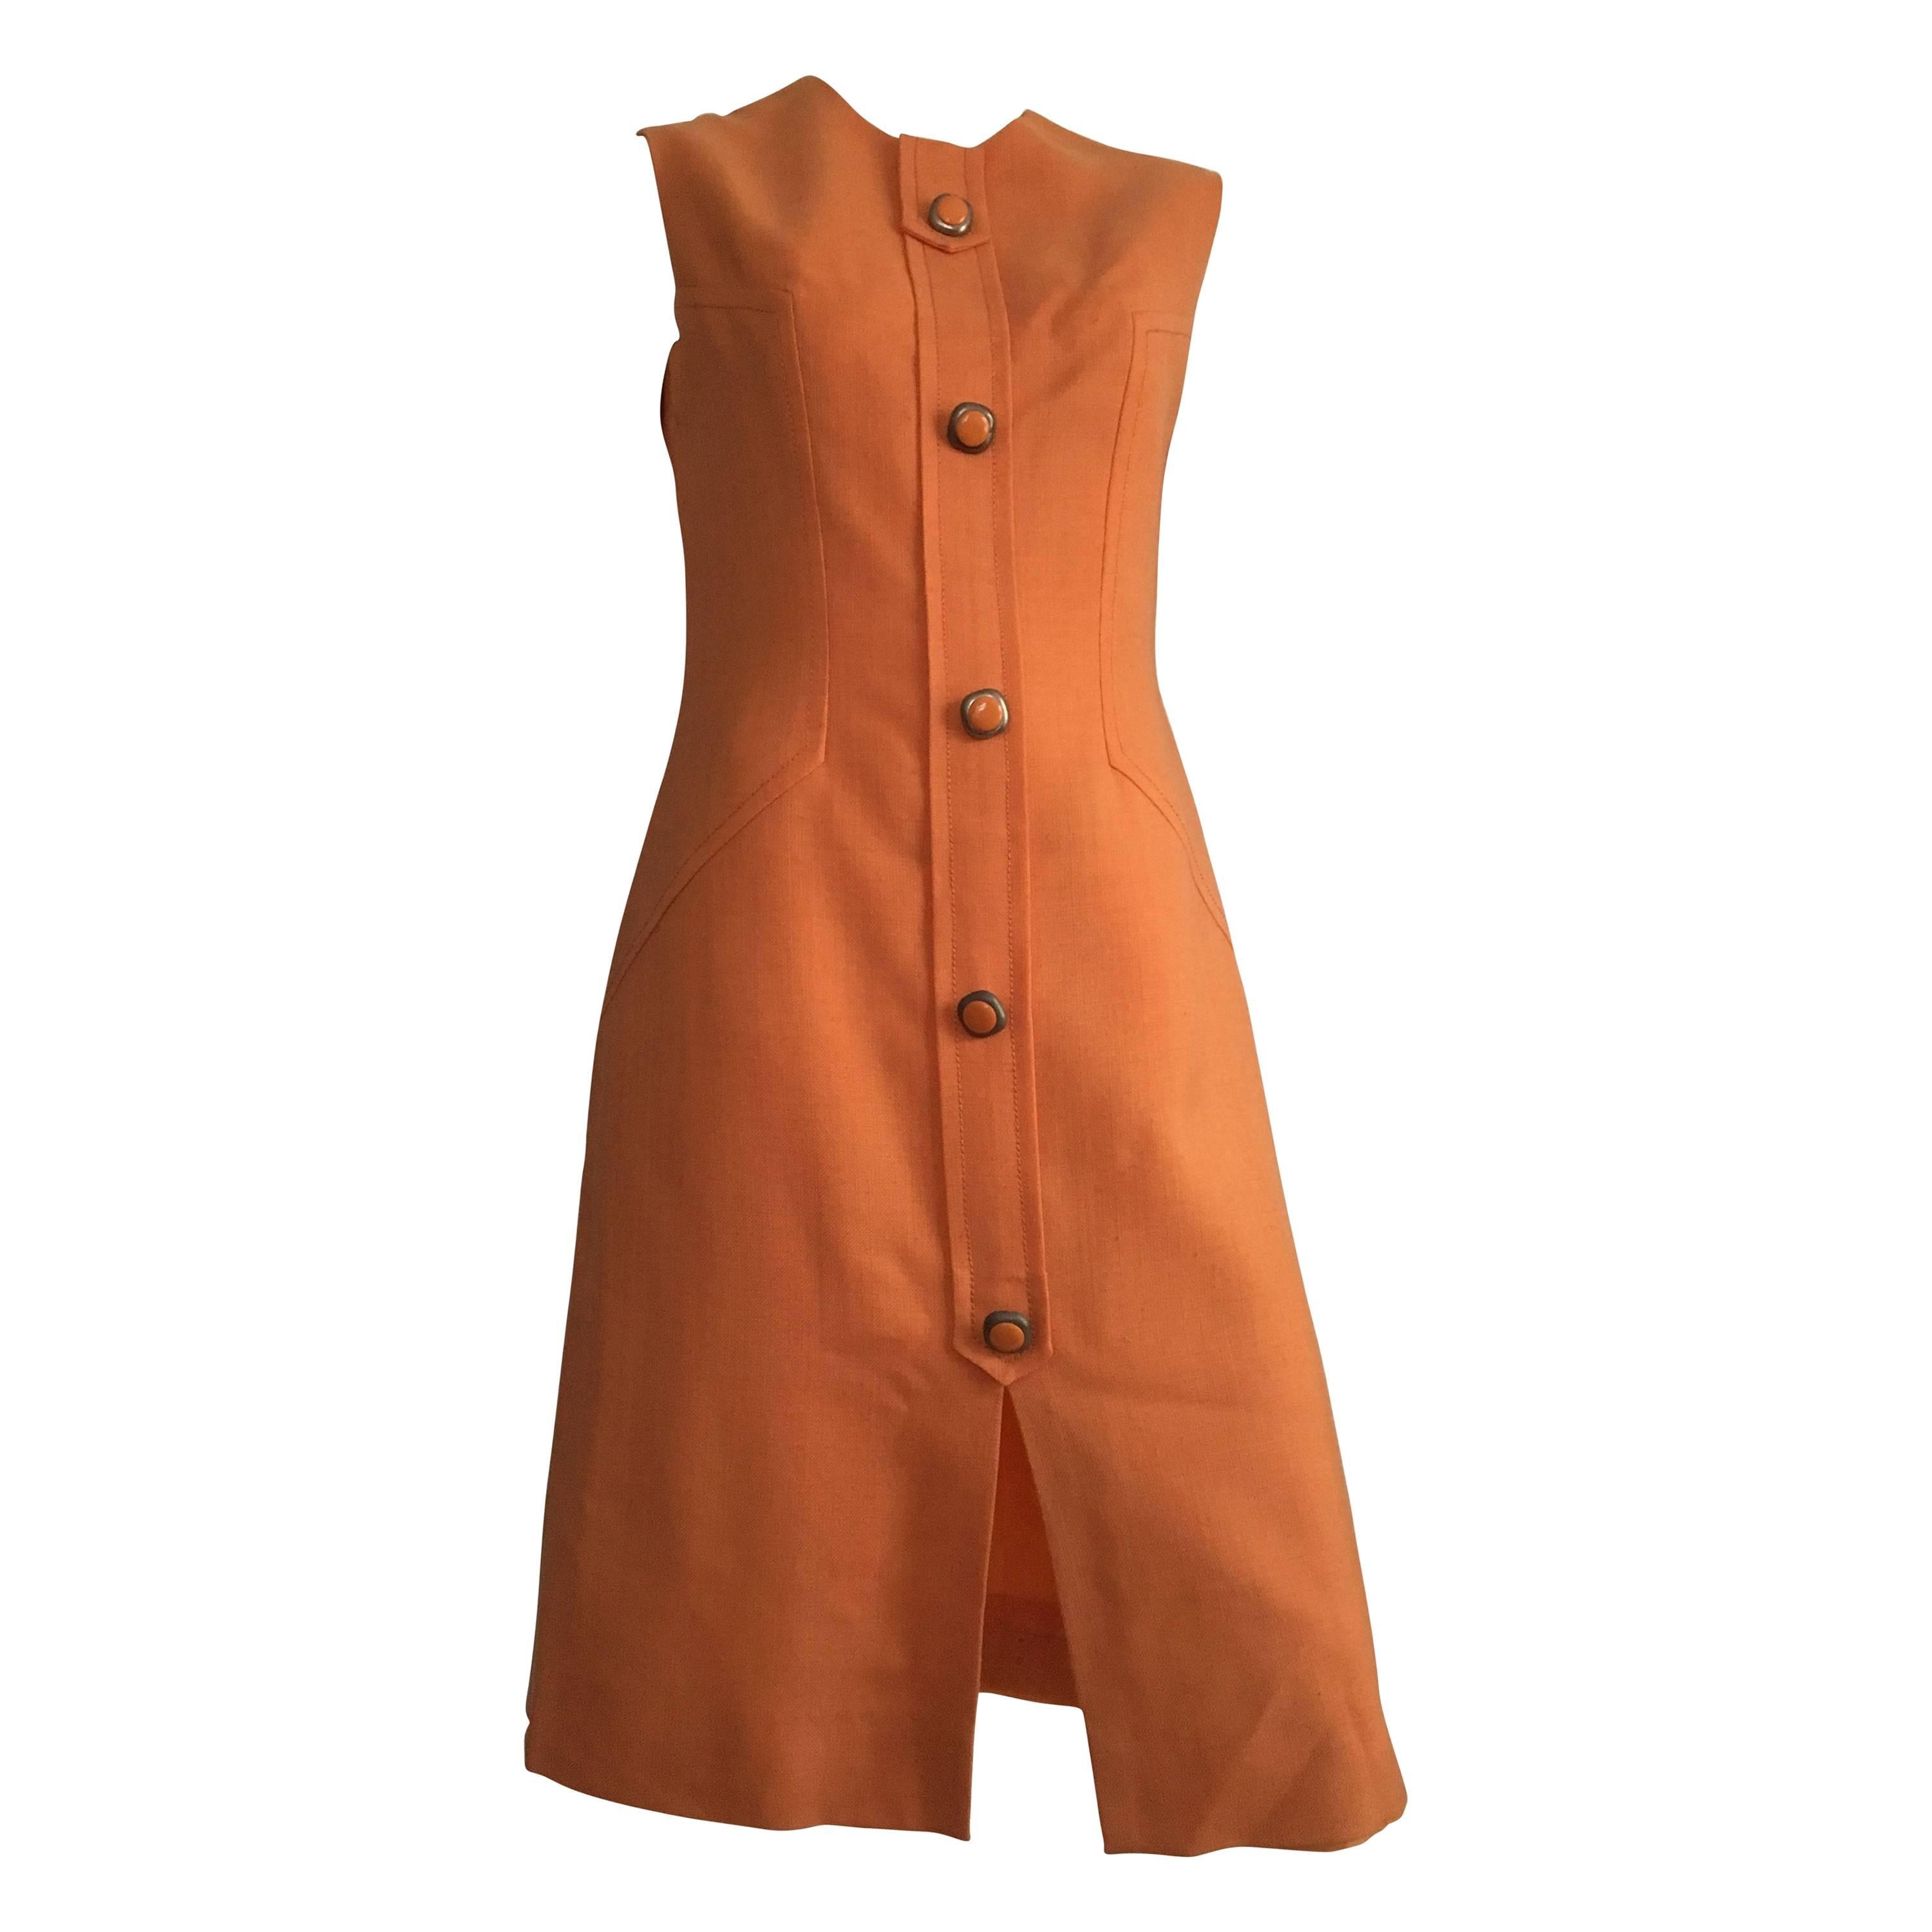 Anne Sorrente 60s Orange Wool Sleeveless Dress Size 8.